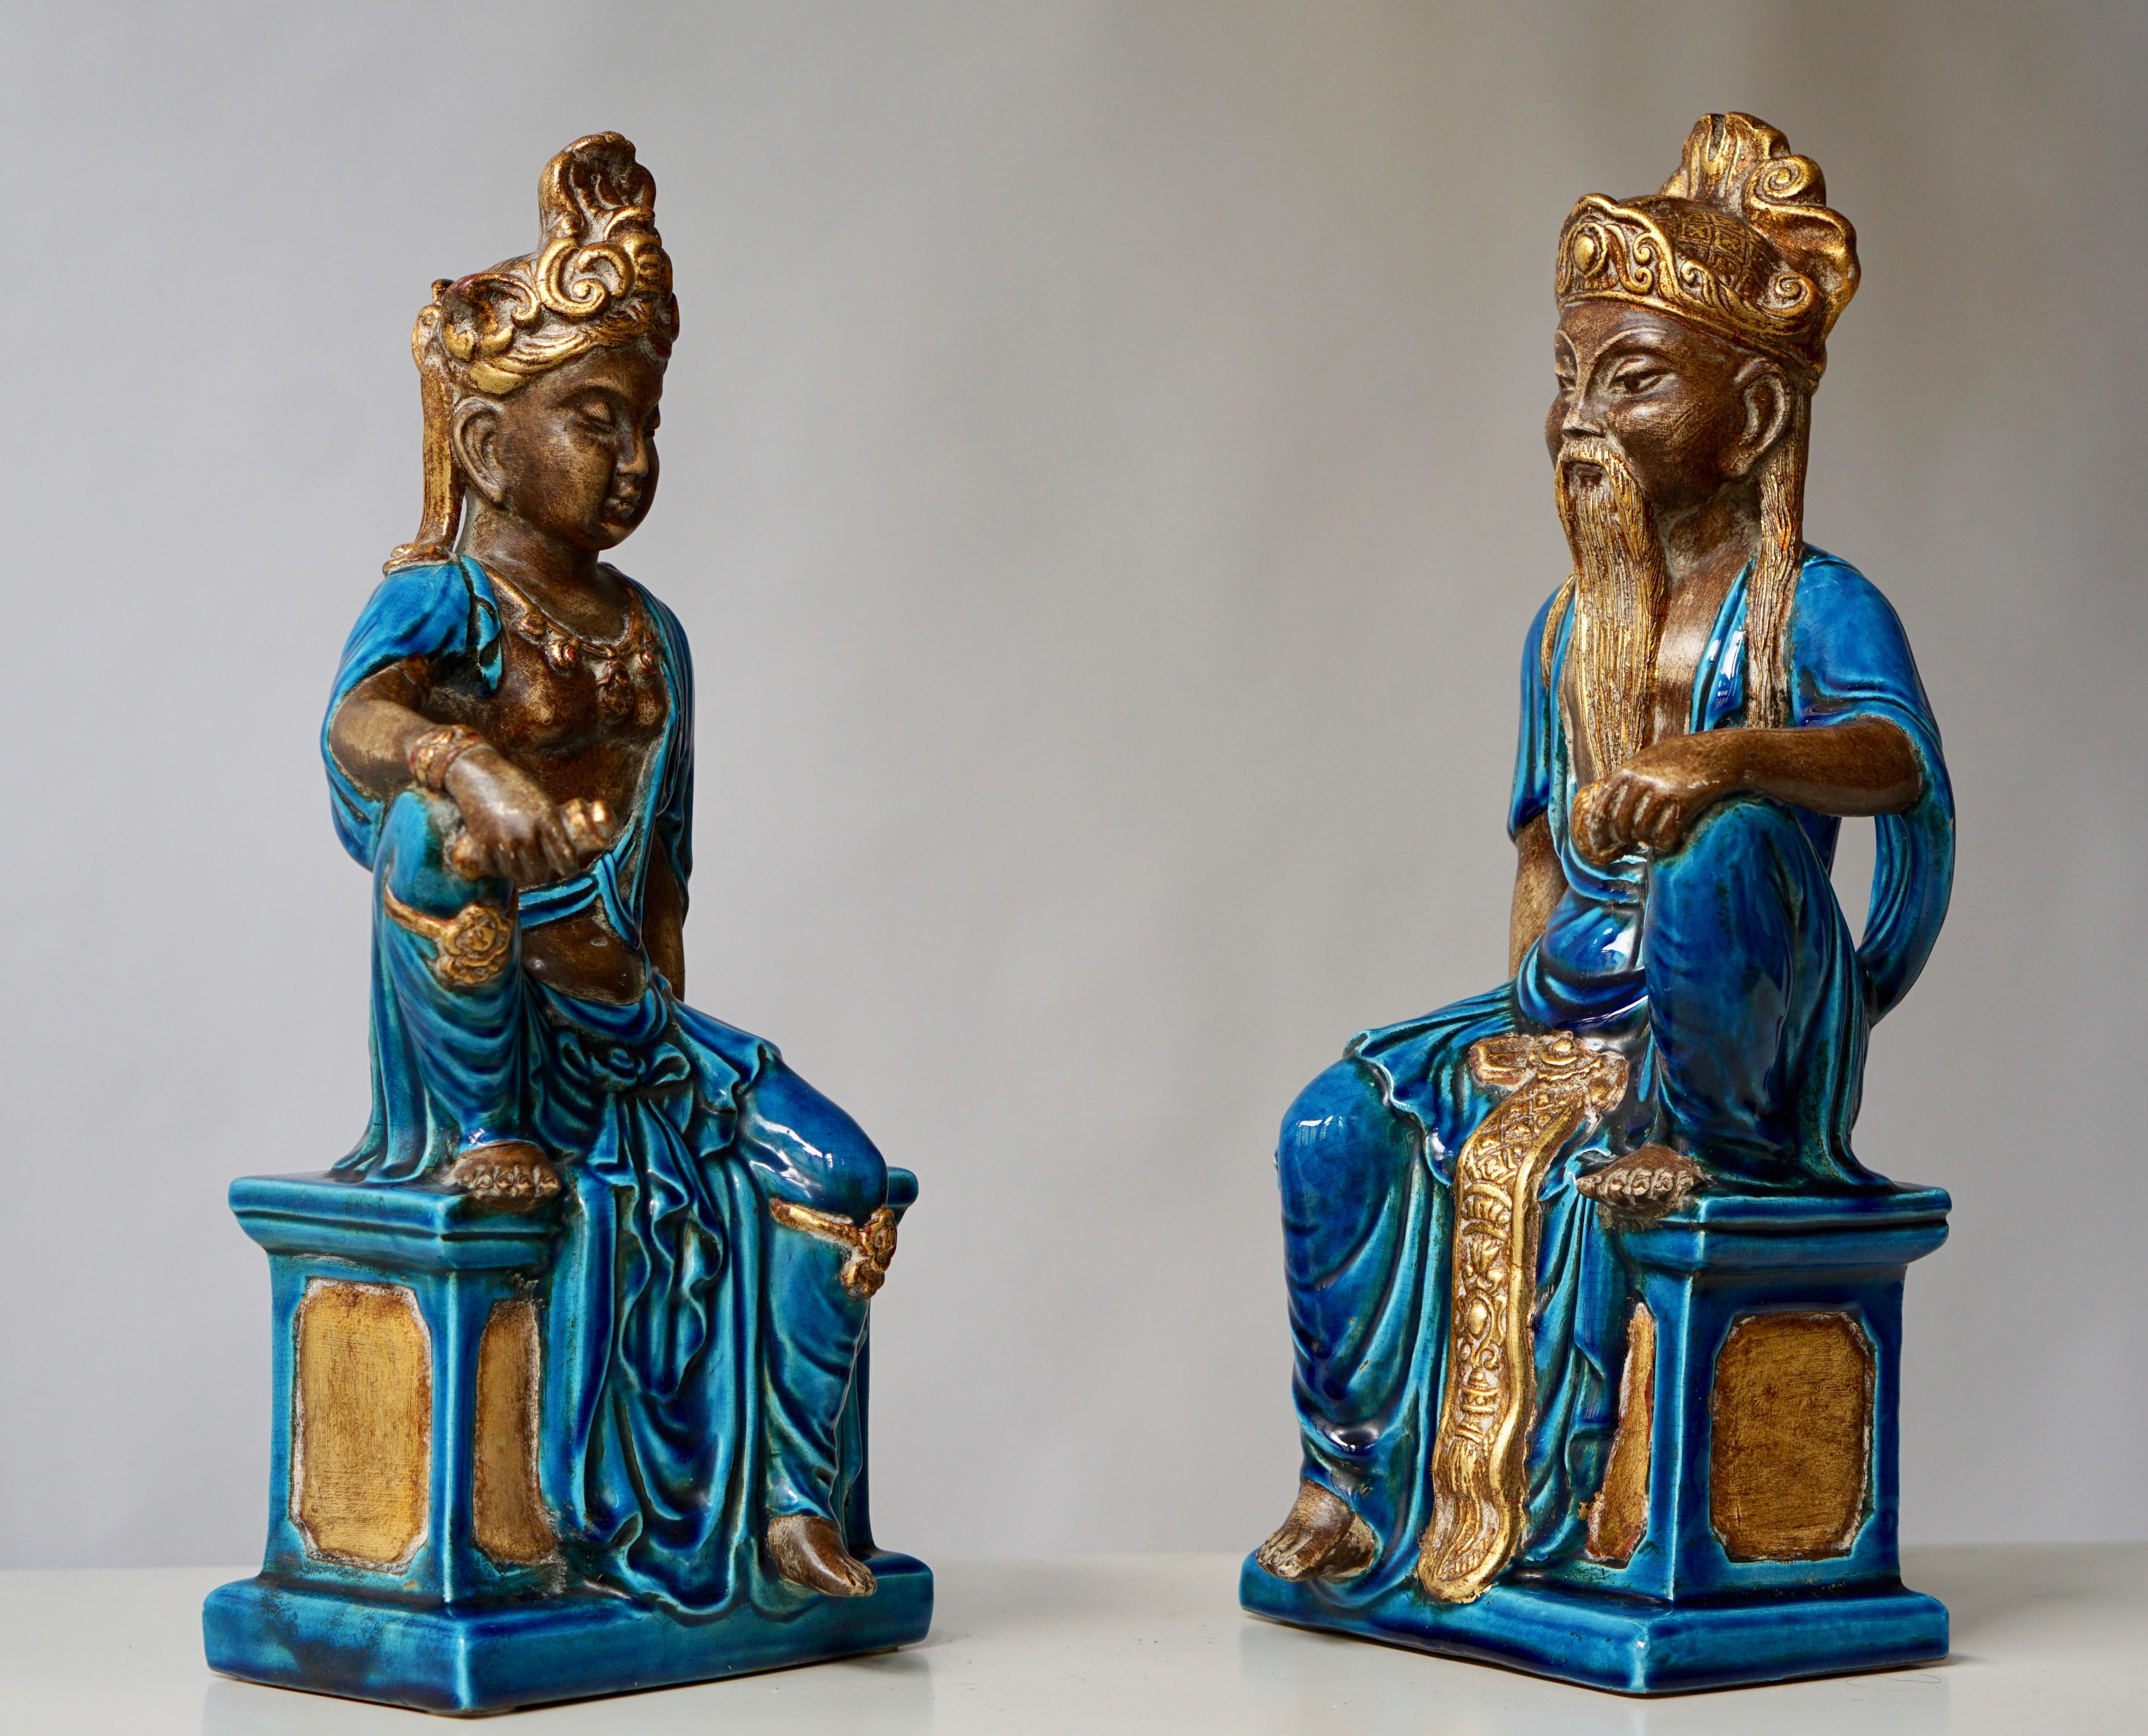 Pair of ceramic figurines by Ugo Zaccagnini.
Italy, 1960s.